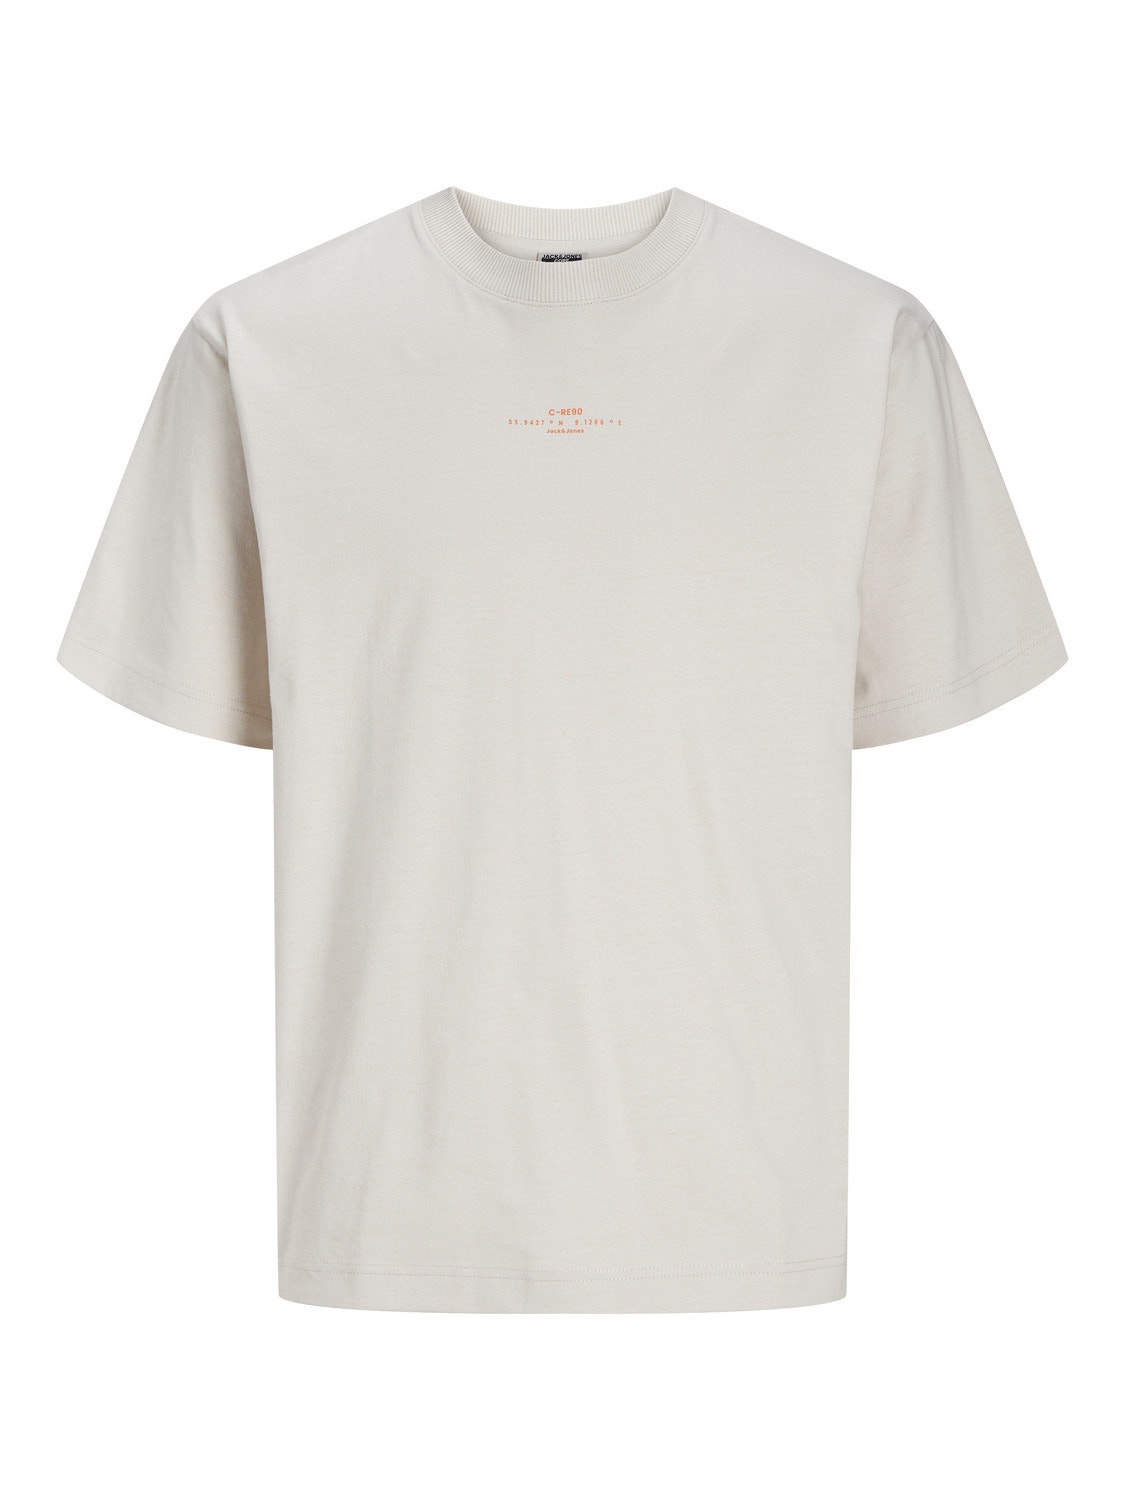 Jack & Jones Gedruckt Rundhals T-shirt -Moonbeam - 12256364